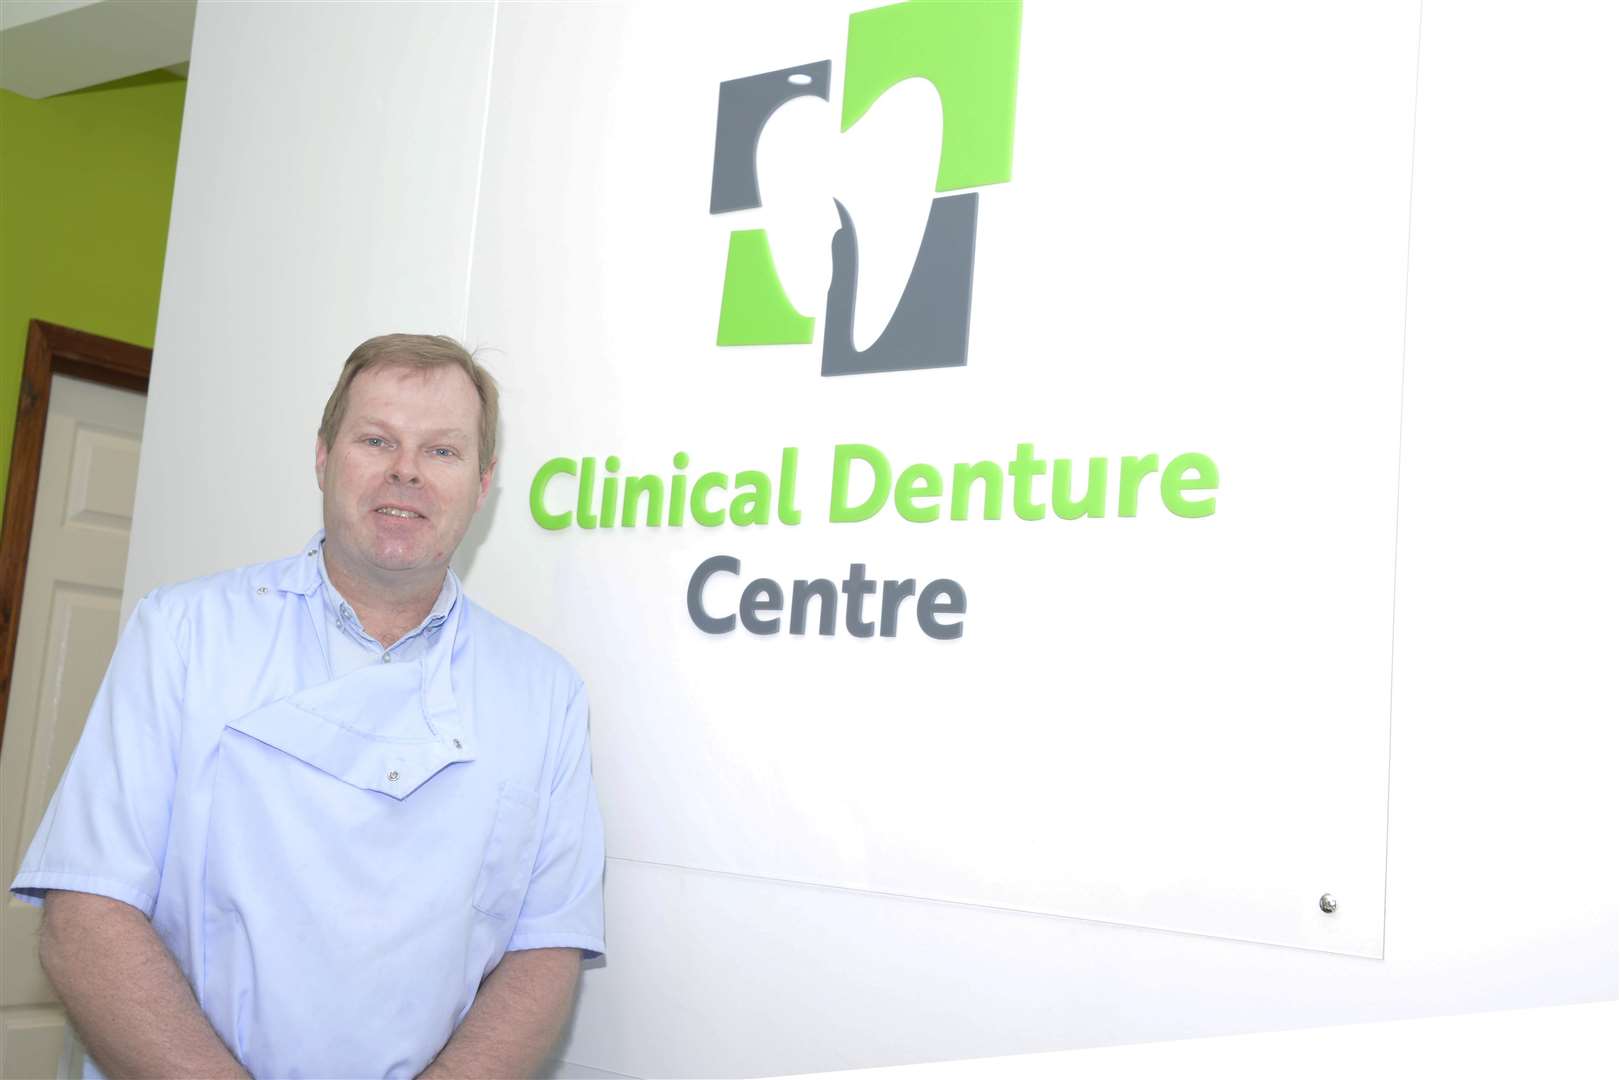 Clinical dental technician Peter Price